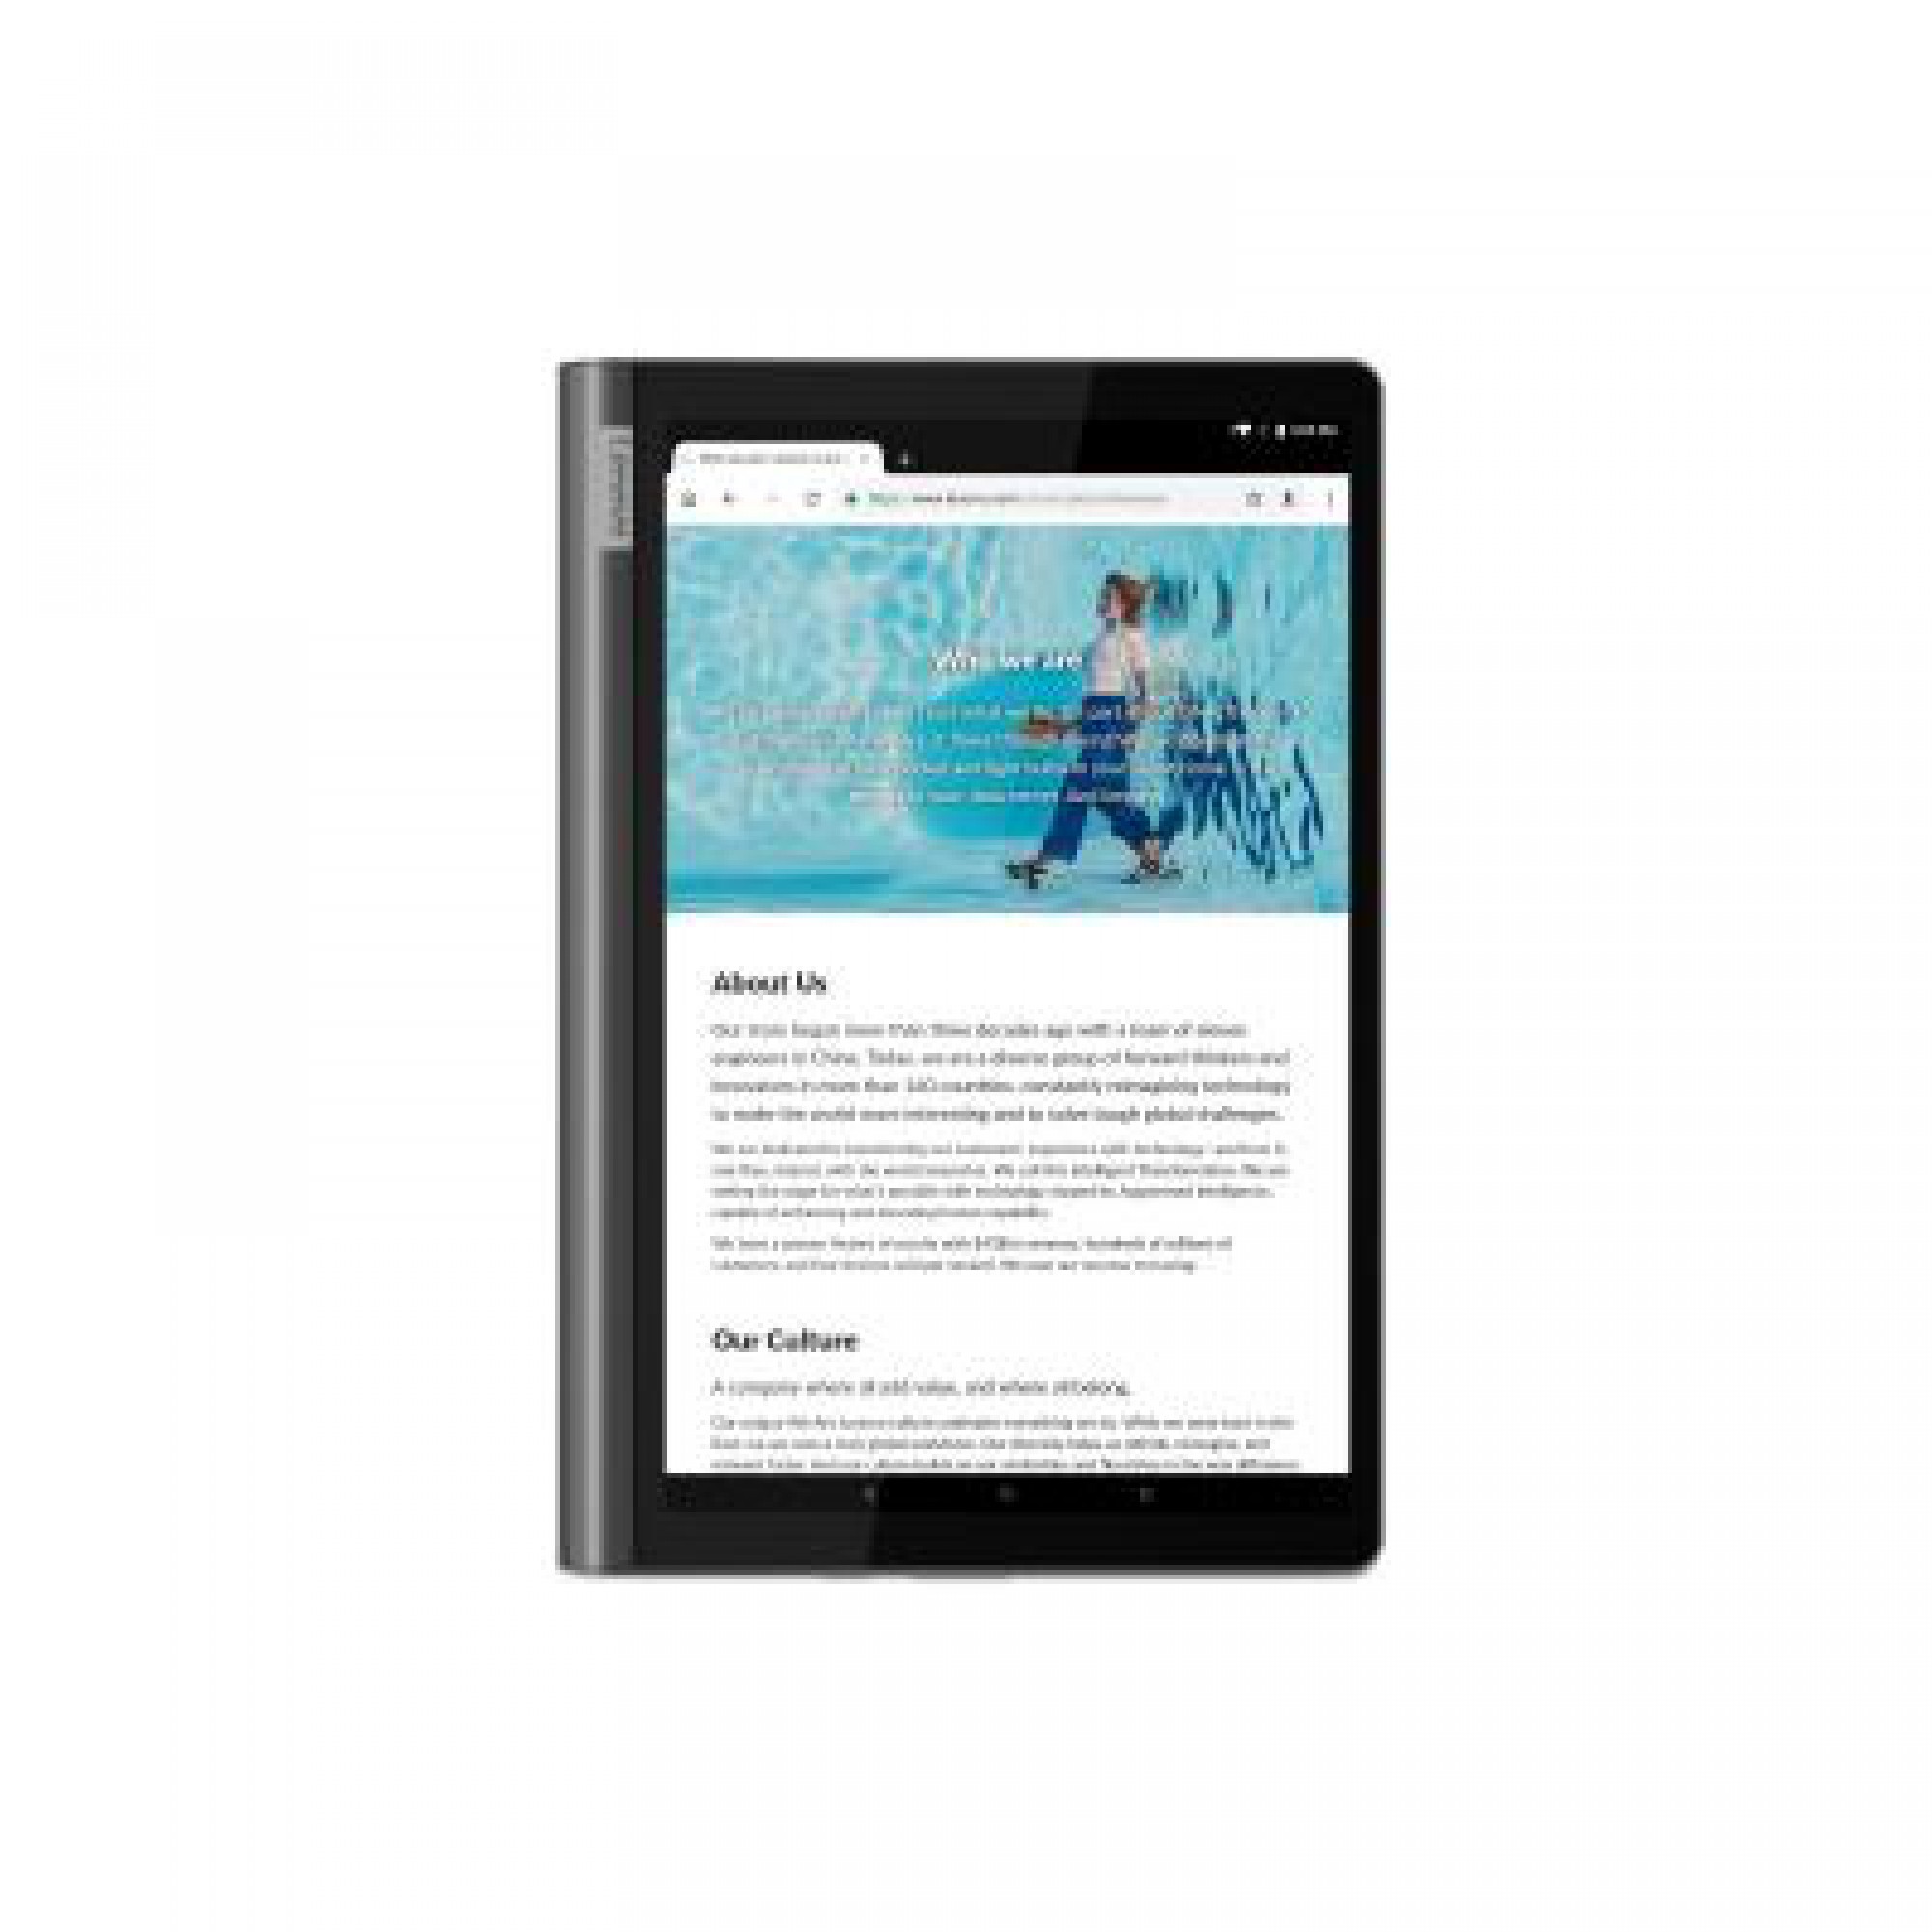 Планшет Lenovo Yoga Smart Tab 4/64 LTE Iron Grey (ZA530006UA)